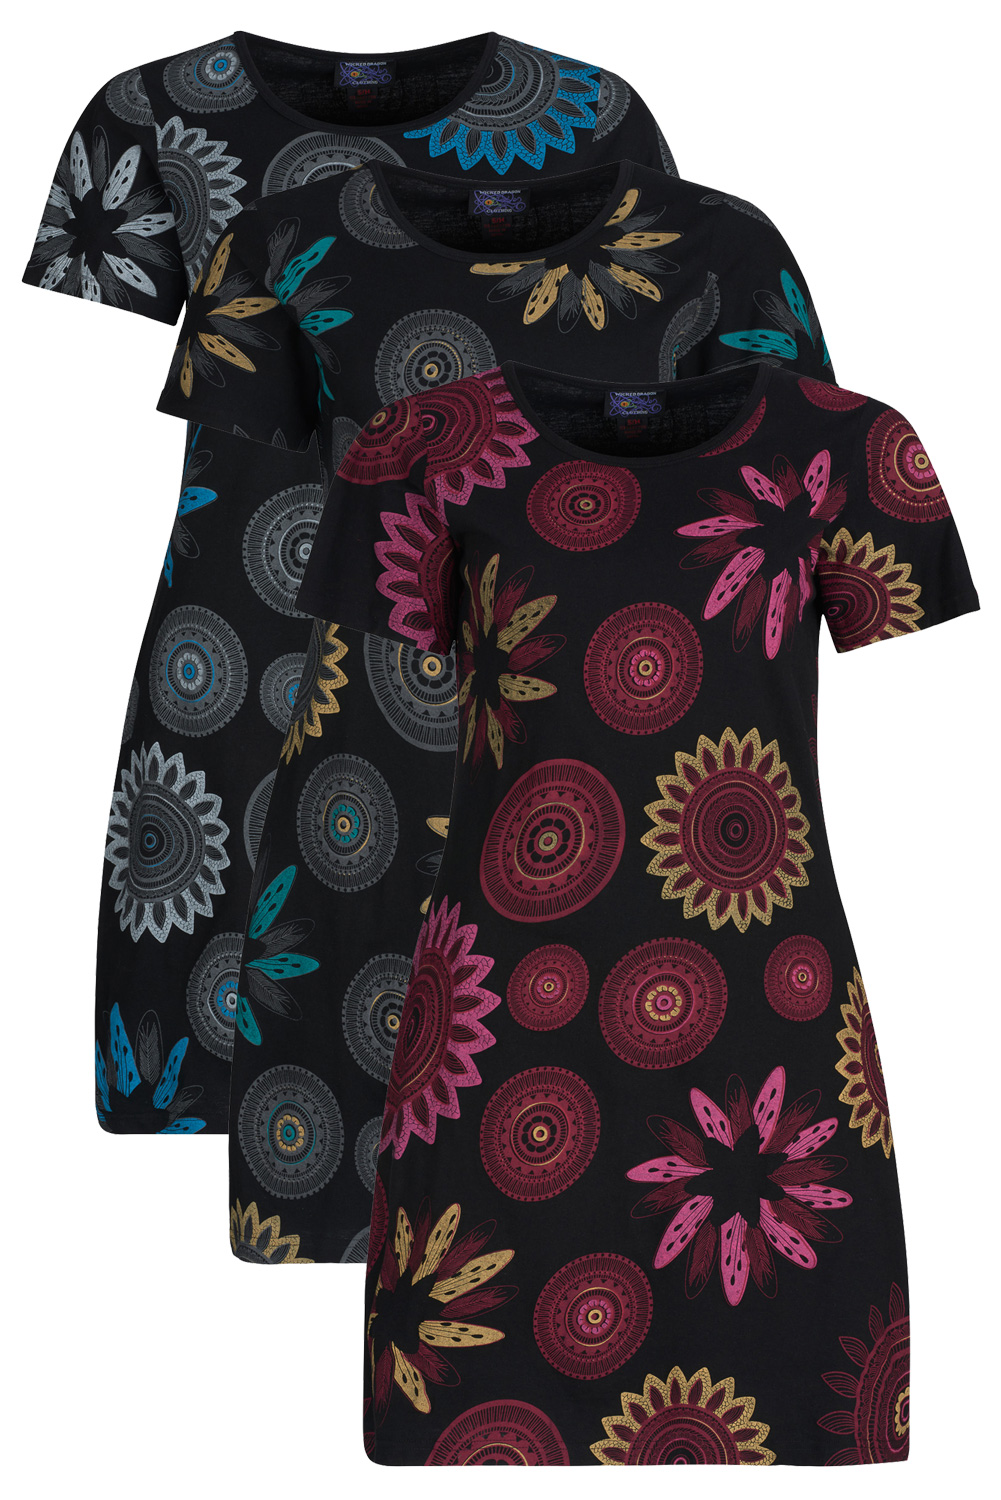 Mandala flower short sleeve dress with pockets